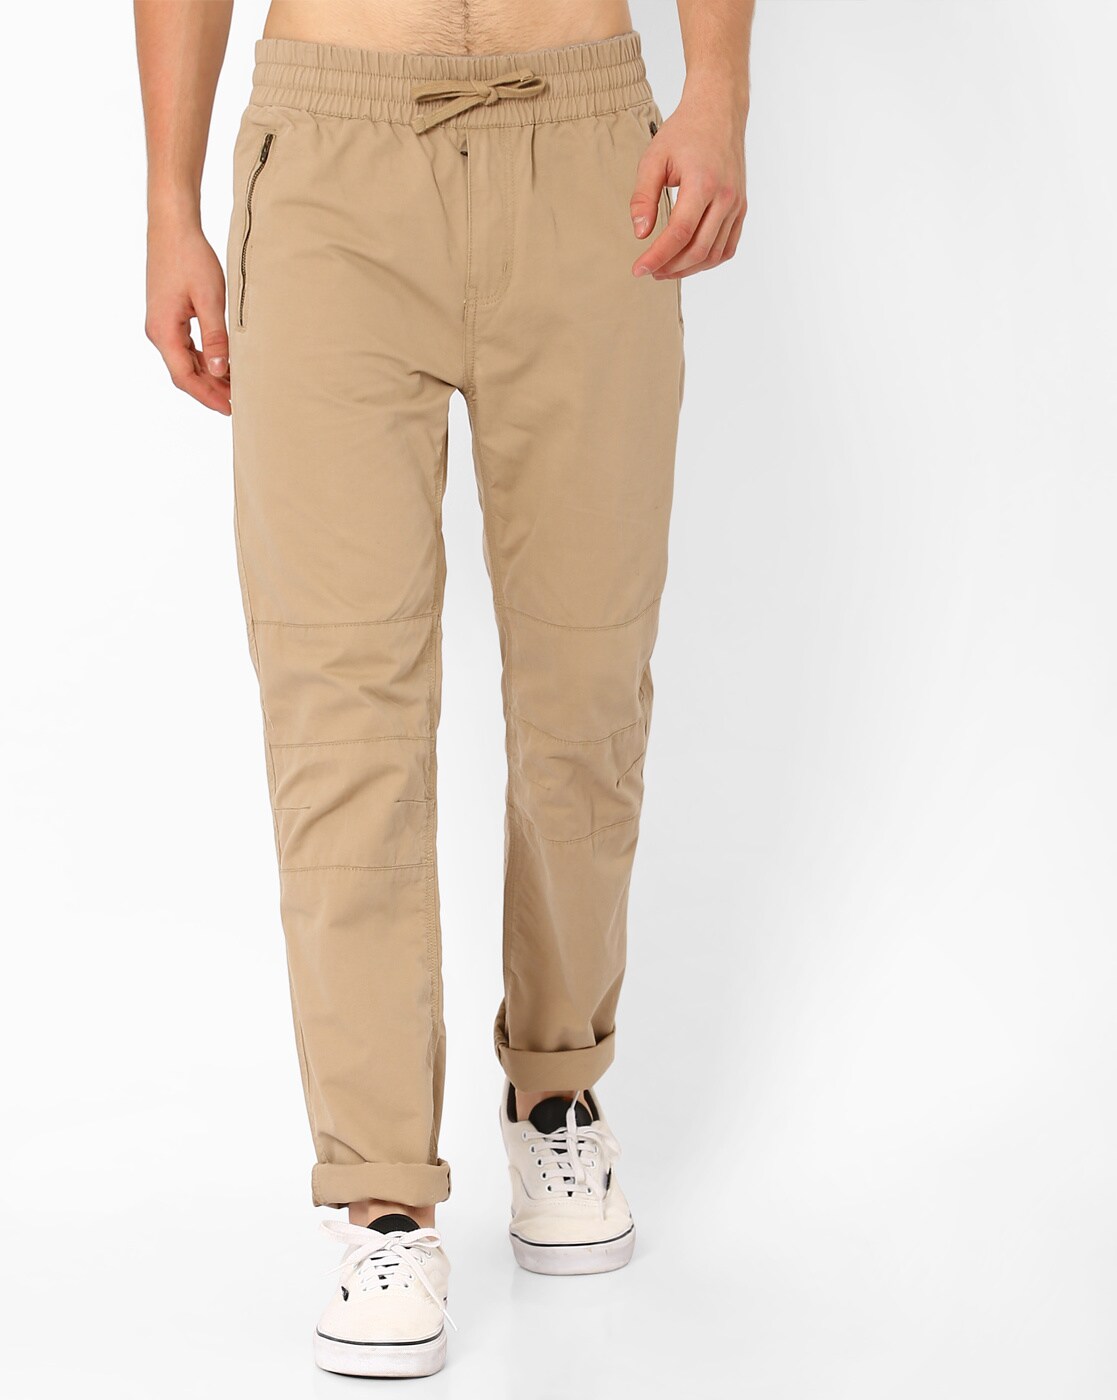 Teamspirit Men's Cotton Regular Grey Trackpant|BDF Shopping